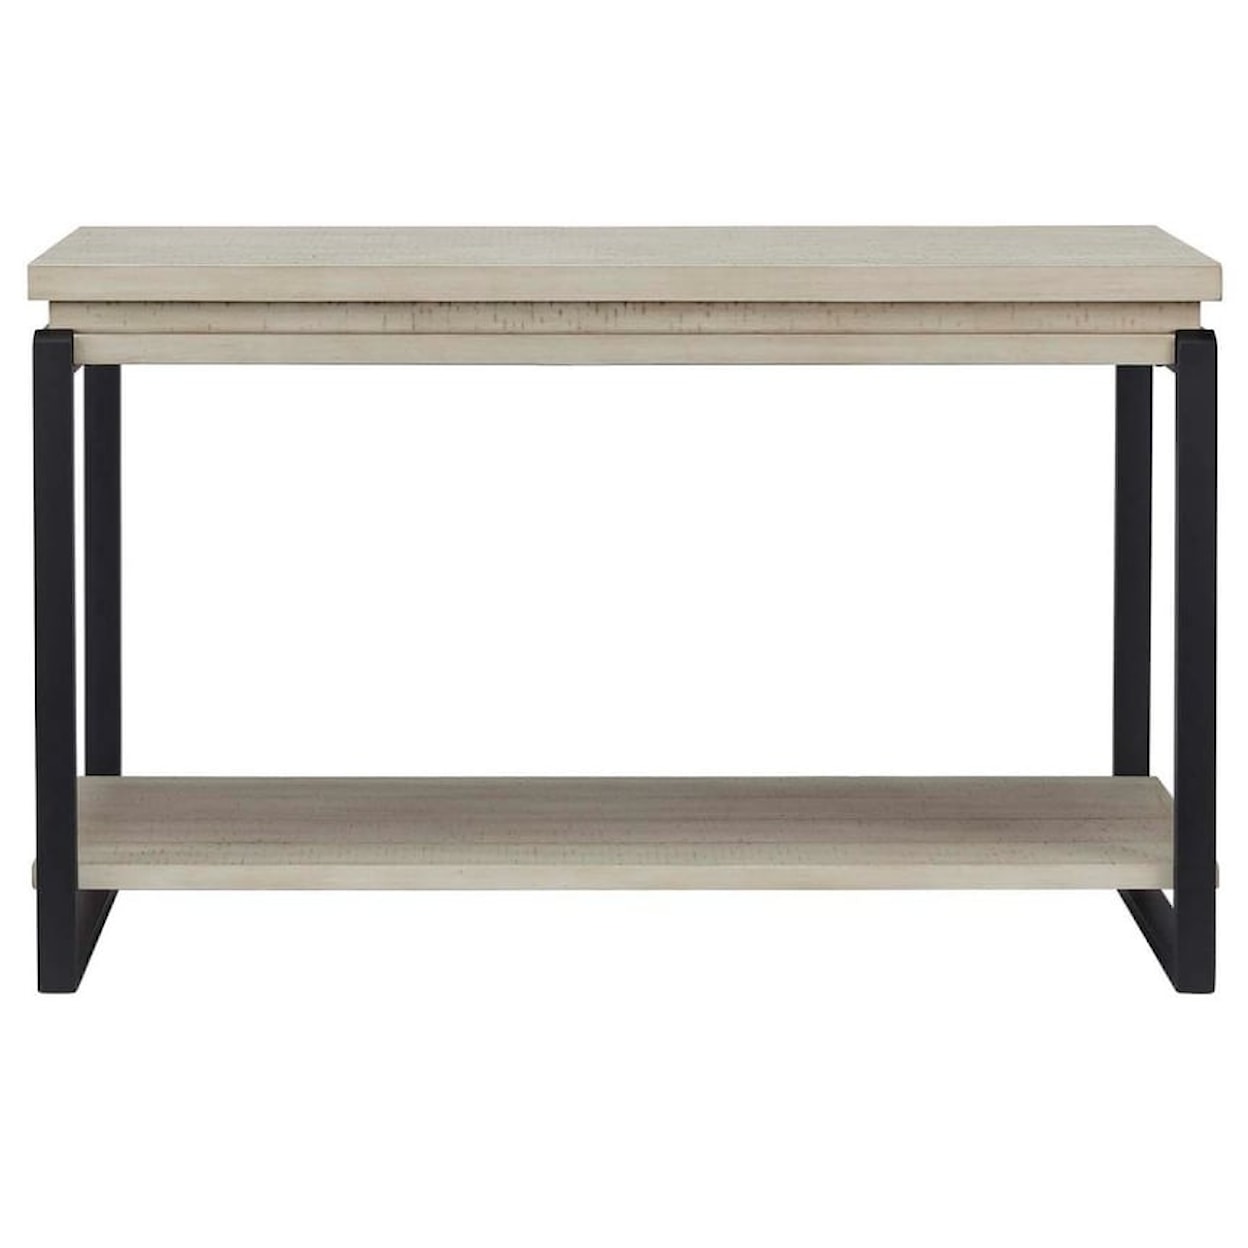 Progressive Furniture Eaglewood Sofa Table